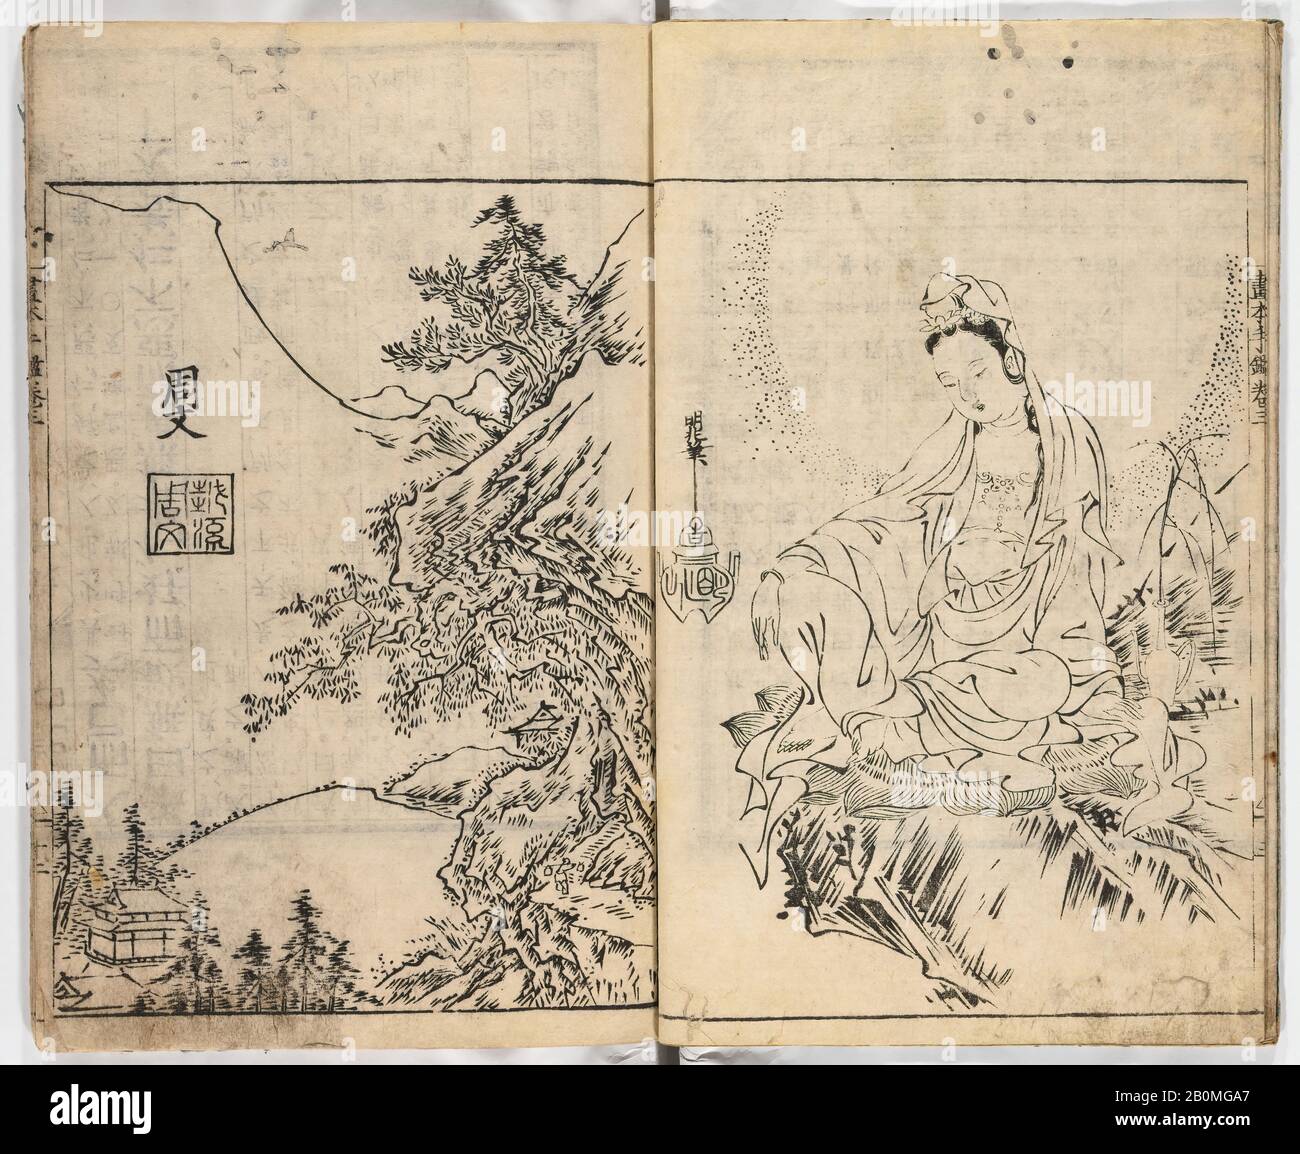 Katsushika Hokusai 葛飾北斎, A Realistic Sketchbook by Hokusai (Hokusai  shashin gafu) 北斎写真画譜, Japan, Edo period (1615–1868)